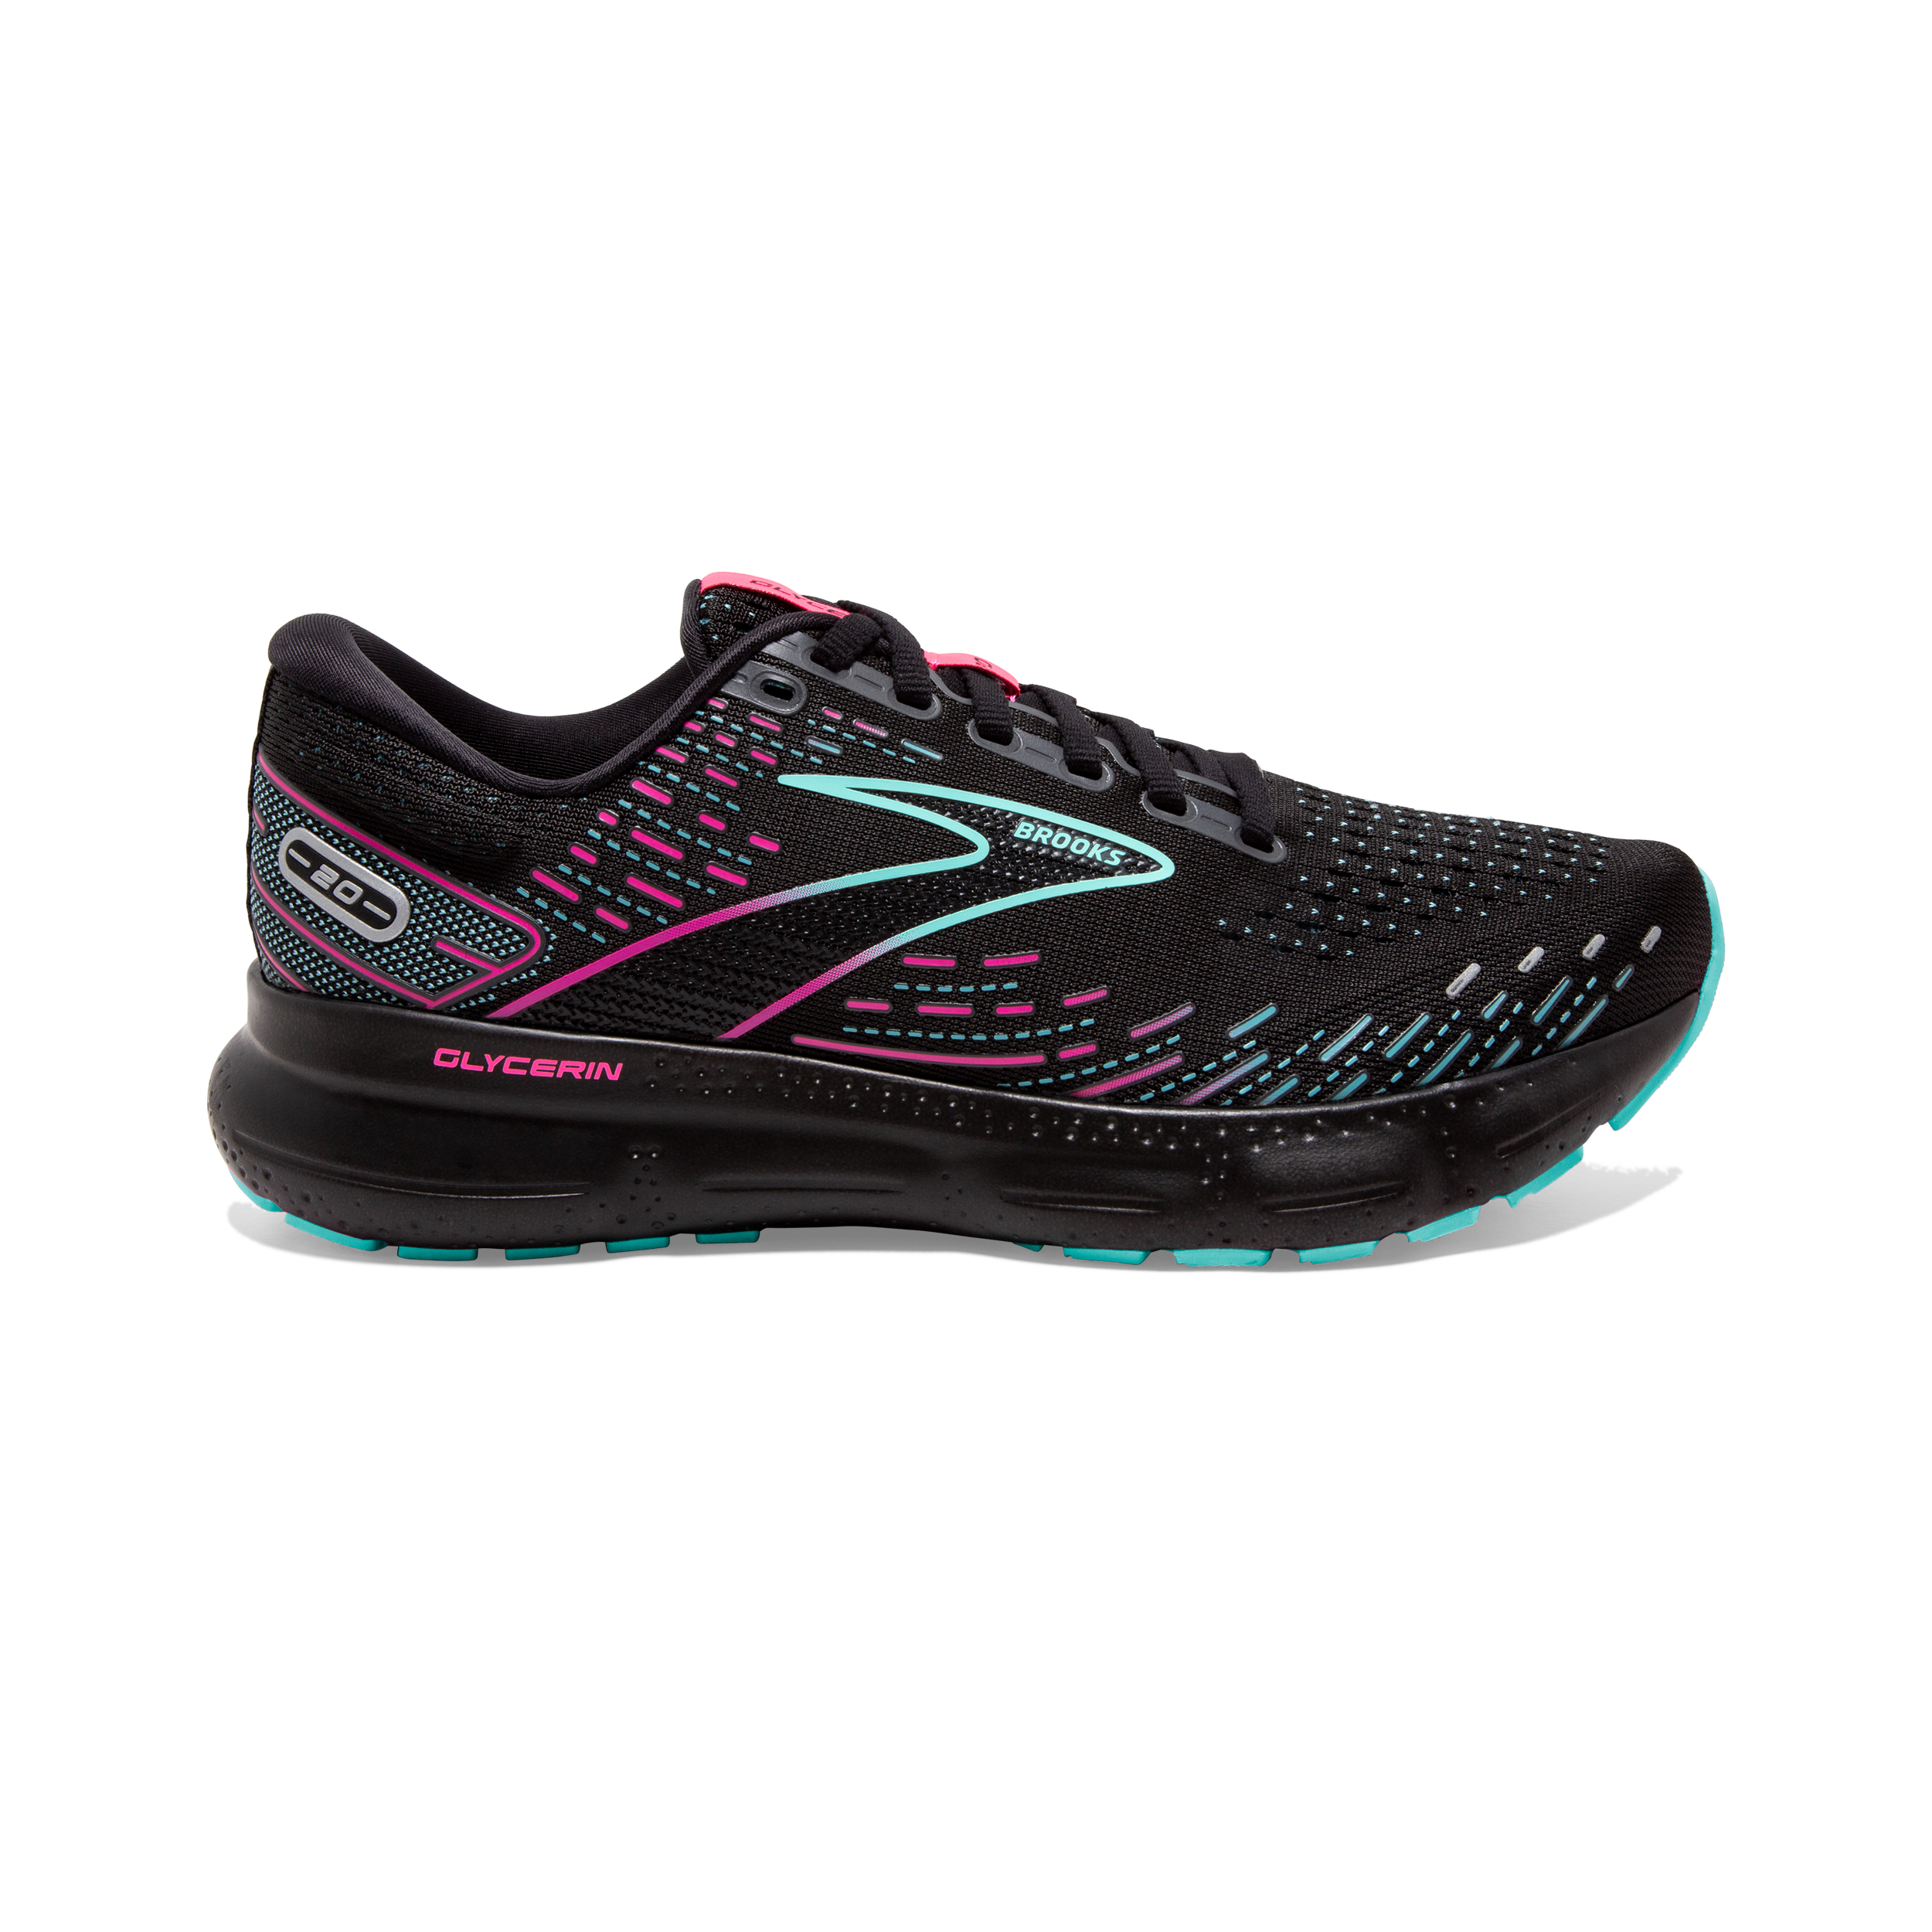 Glycerin 20: Women's Road-Running Shoes | Brooks Running